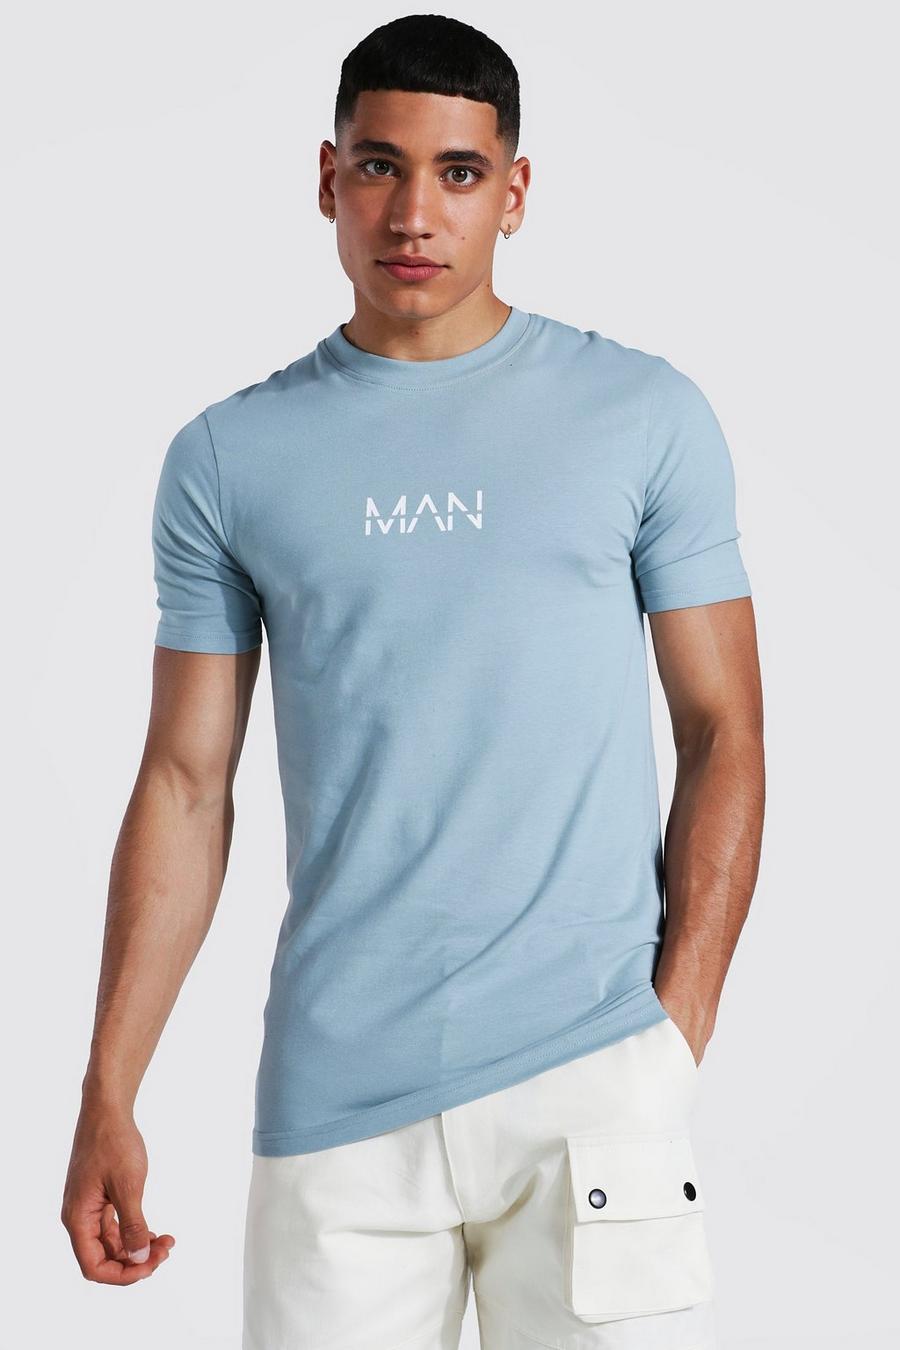 Camiseta MAN Original ajustada al músculo, Dusty blue image number 1